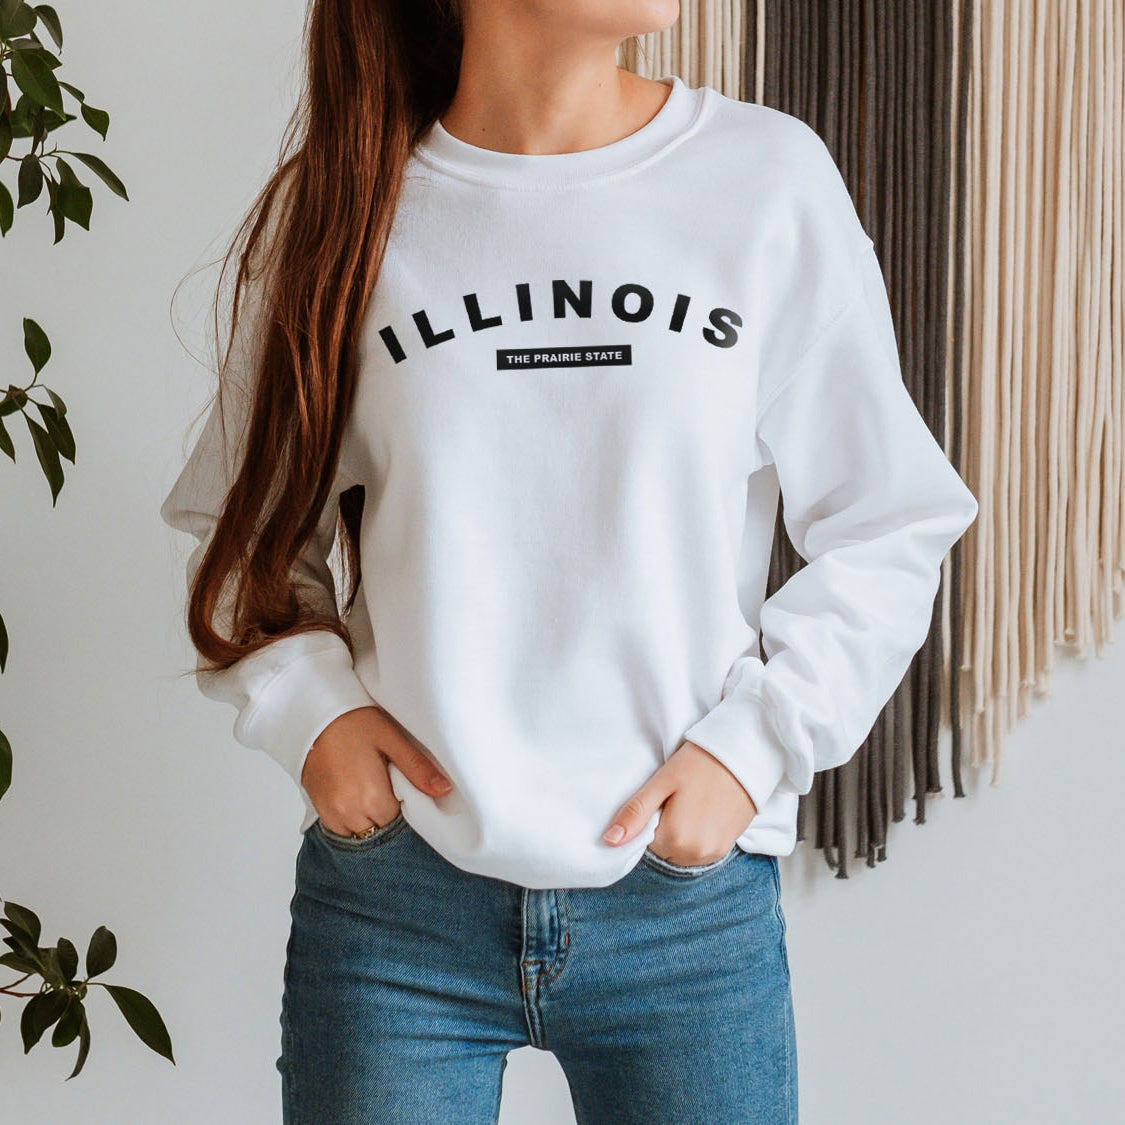 Illinois The Prairie State Sweatshirt - United States Name & Slogan Minimal Design Printed Sweatshirt